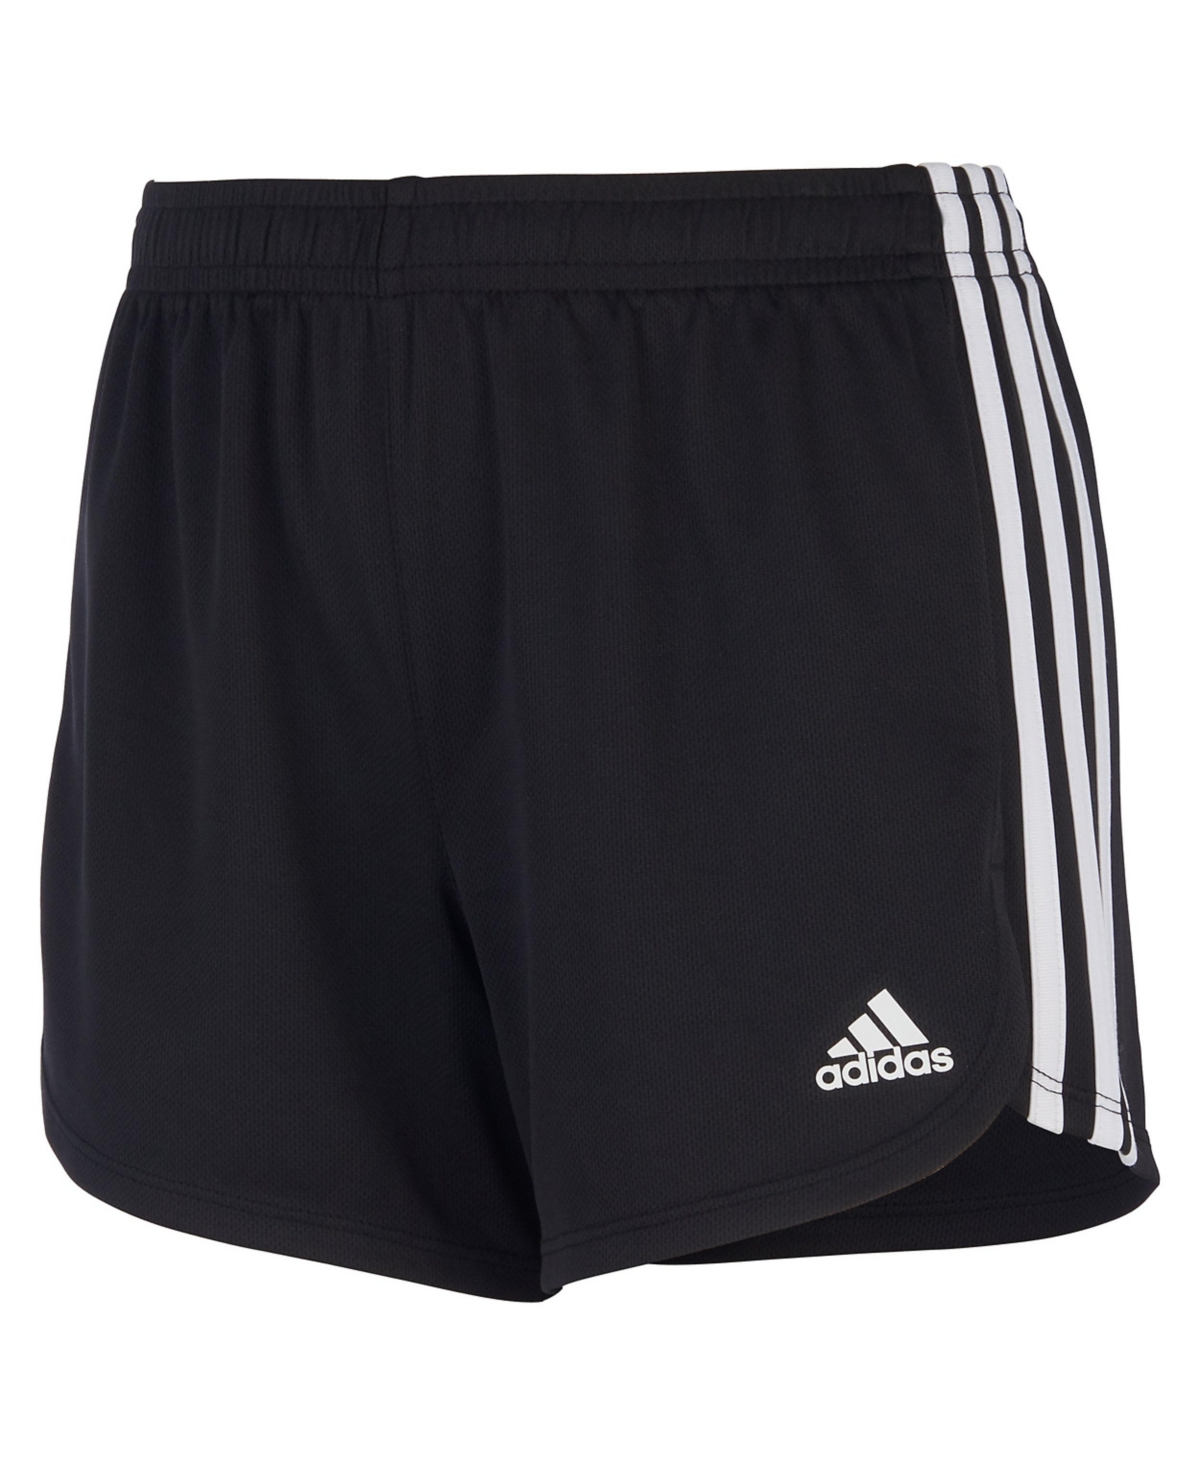 adidas Big Girls 3-Stripes Mesh Shorts, Extended Sizes